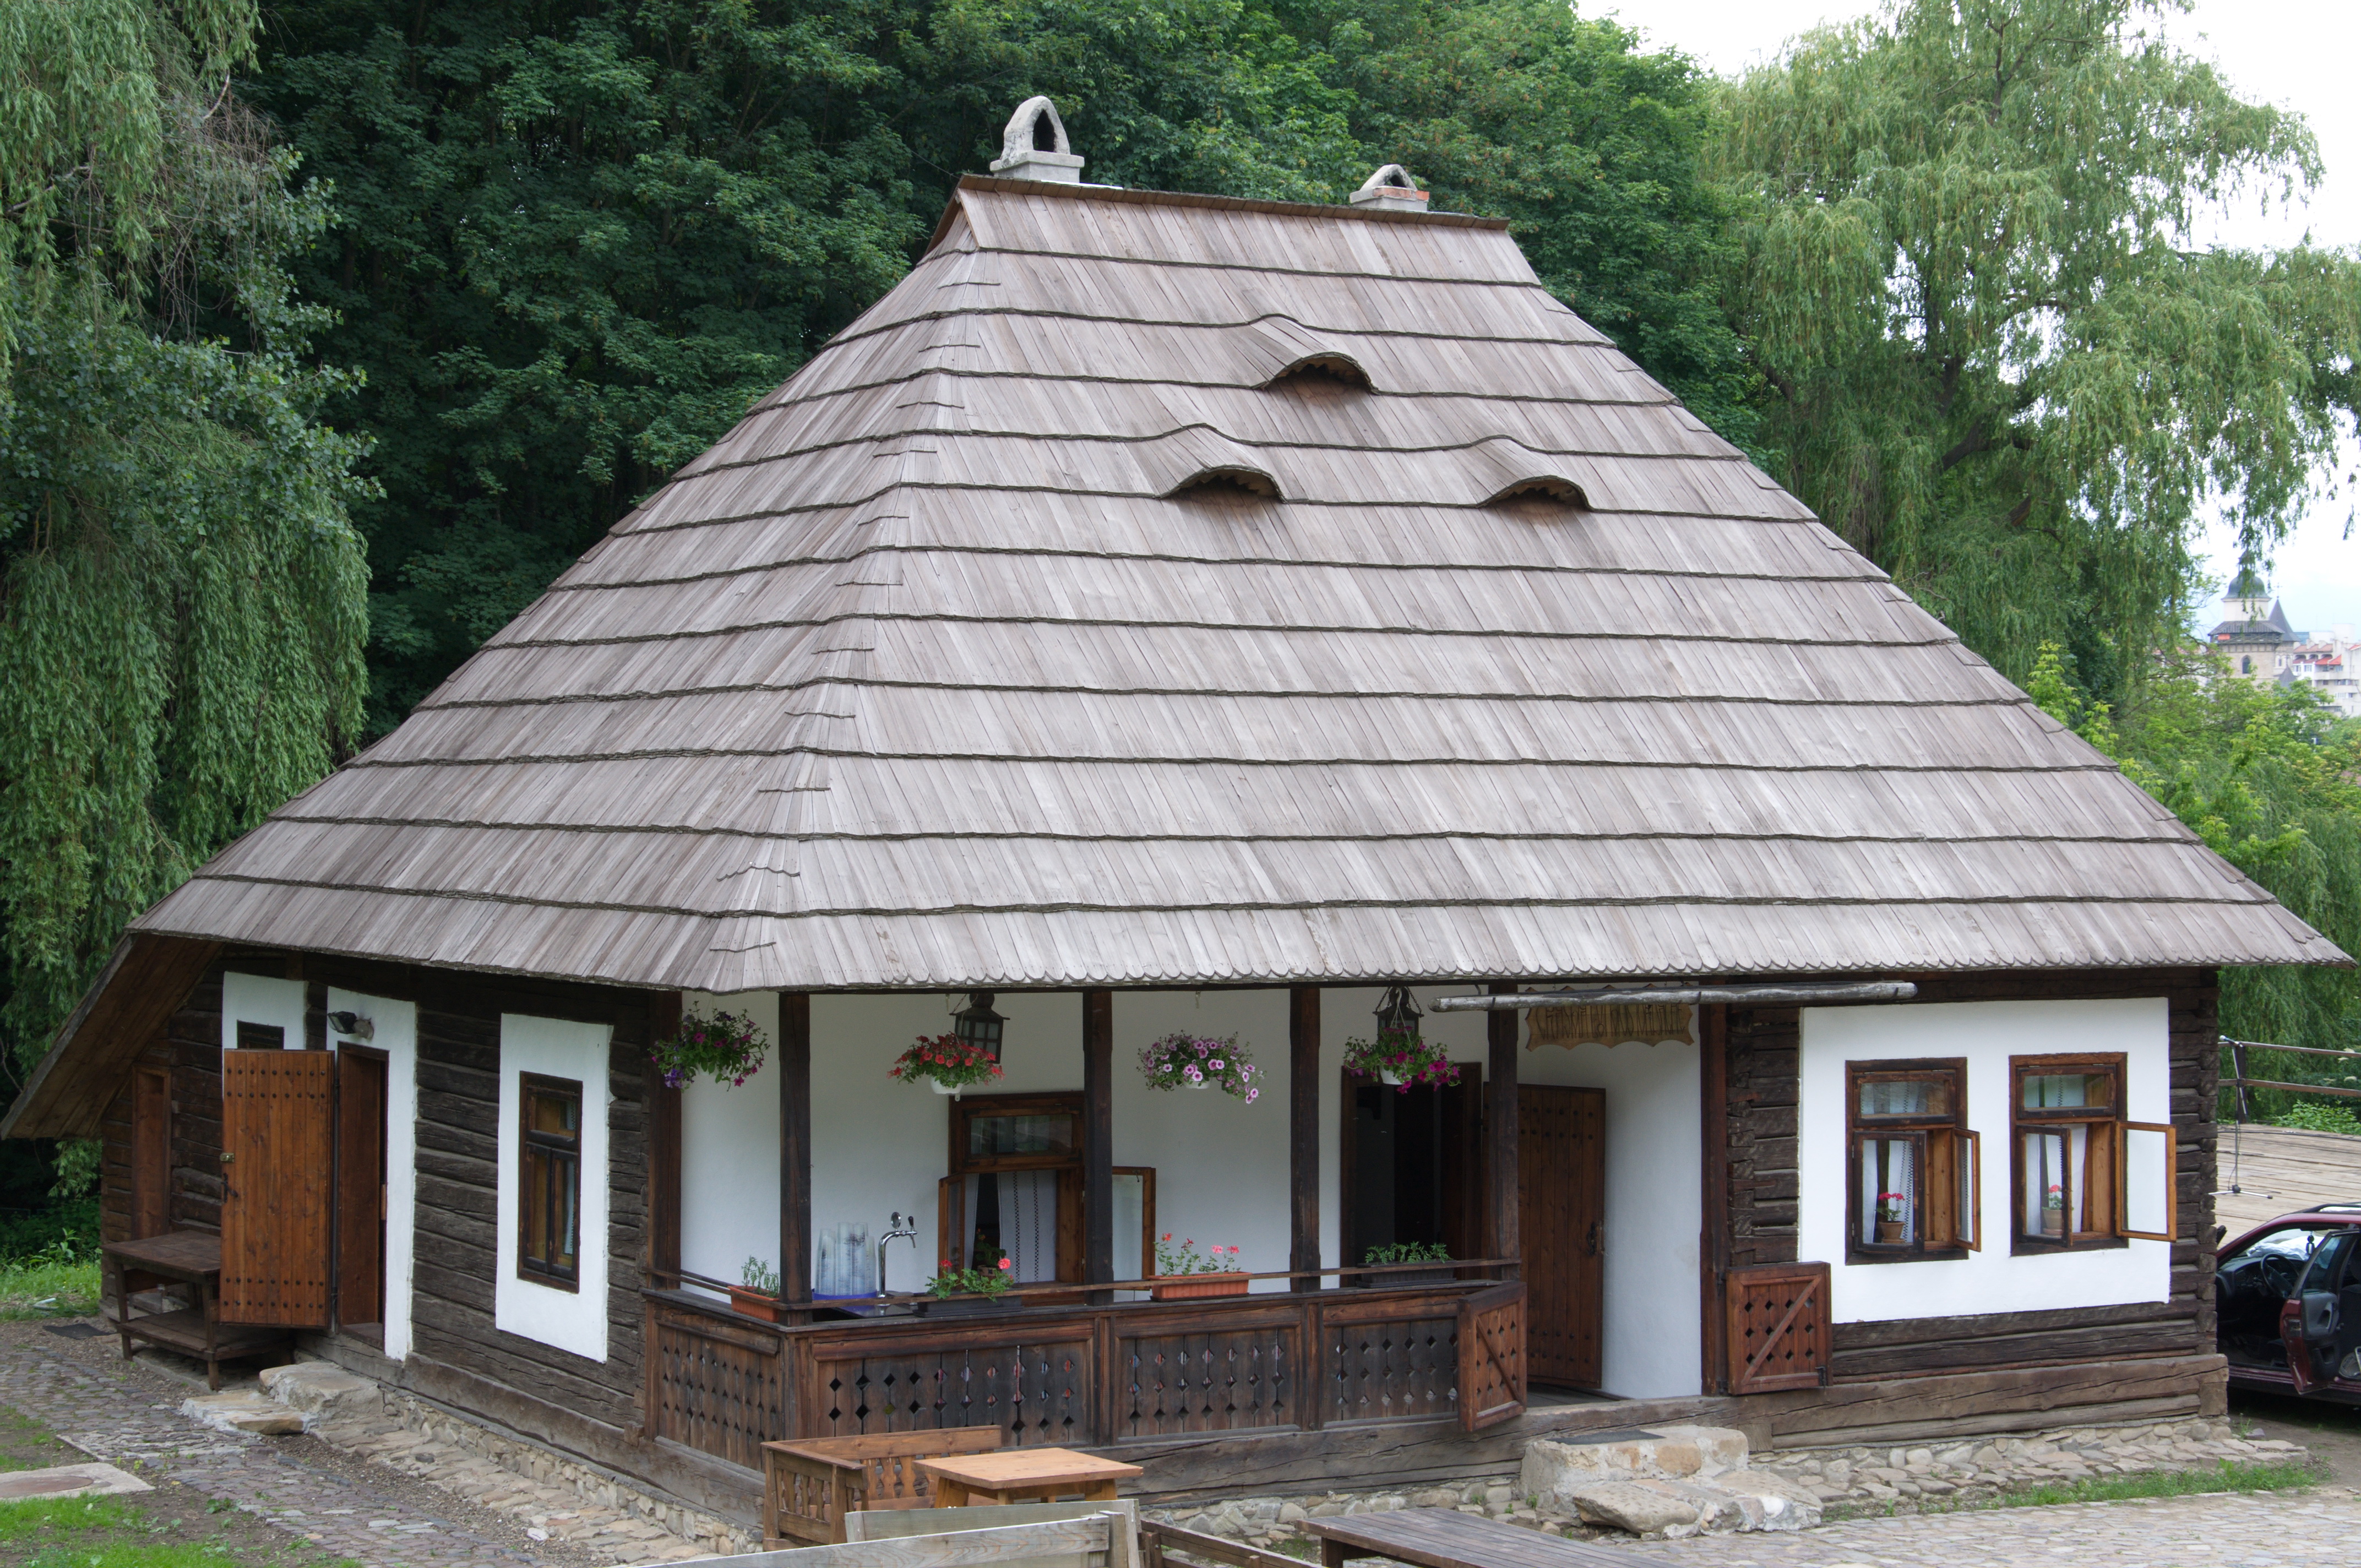 The Bukovina Village Museum